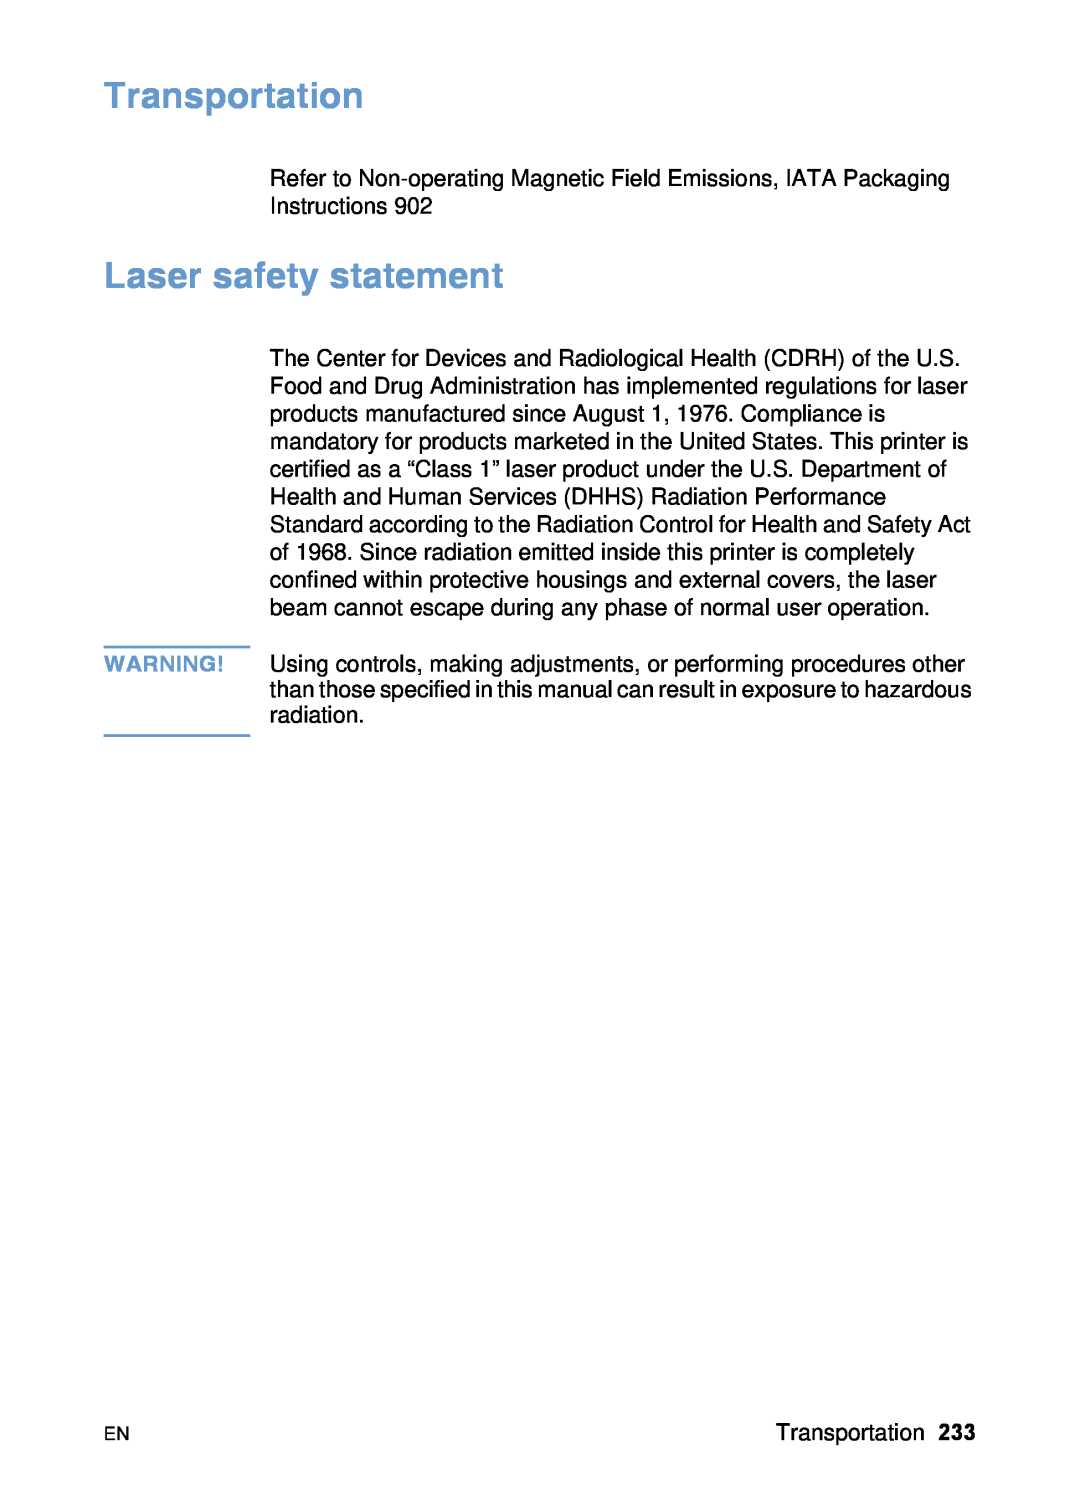 HP 3200 manual Transportation, Laser safety statement 